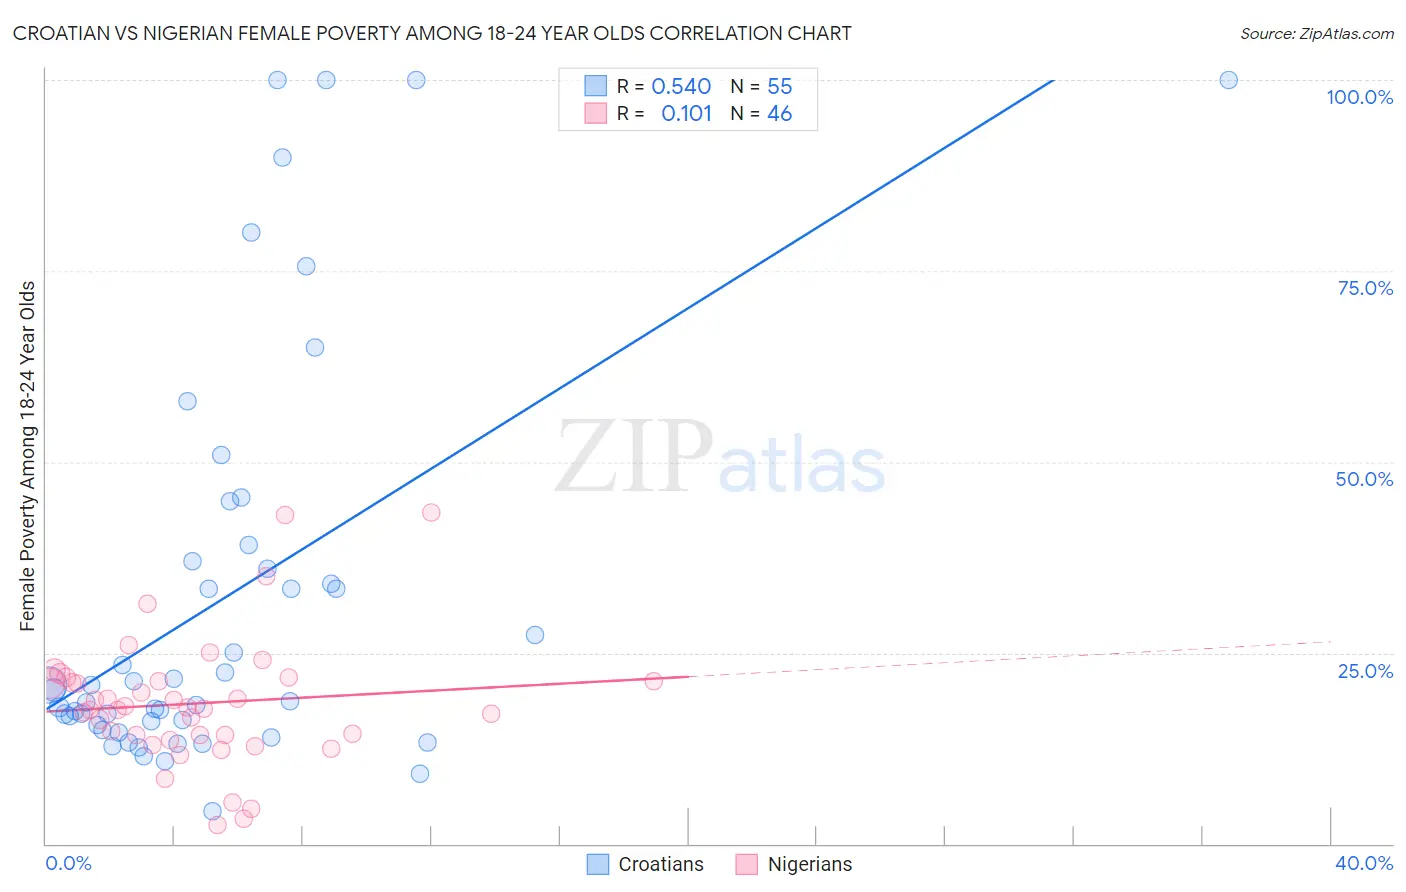 Croatian vs Nigerian Female Poverty Among 18-24 Year Olds